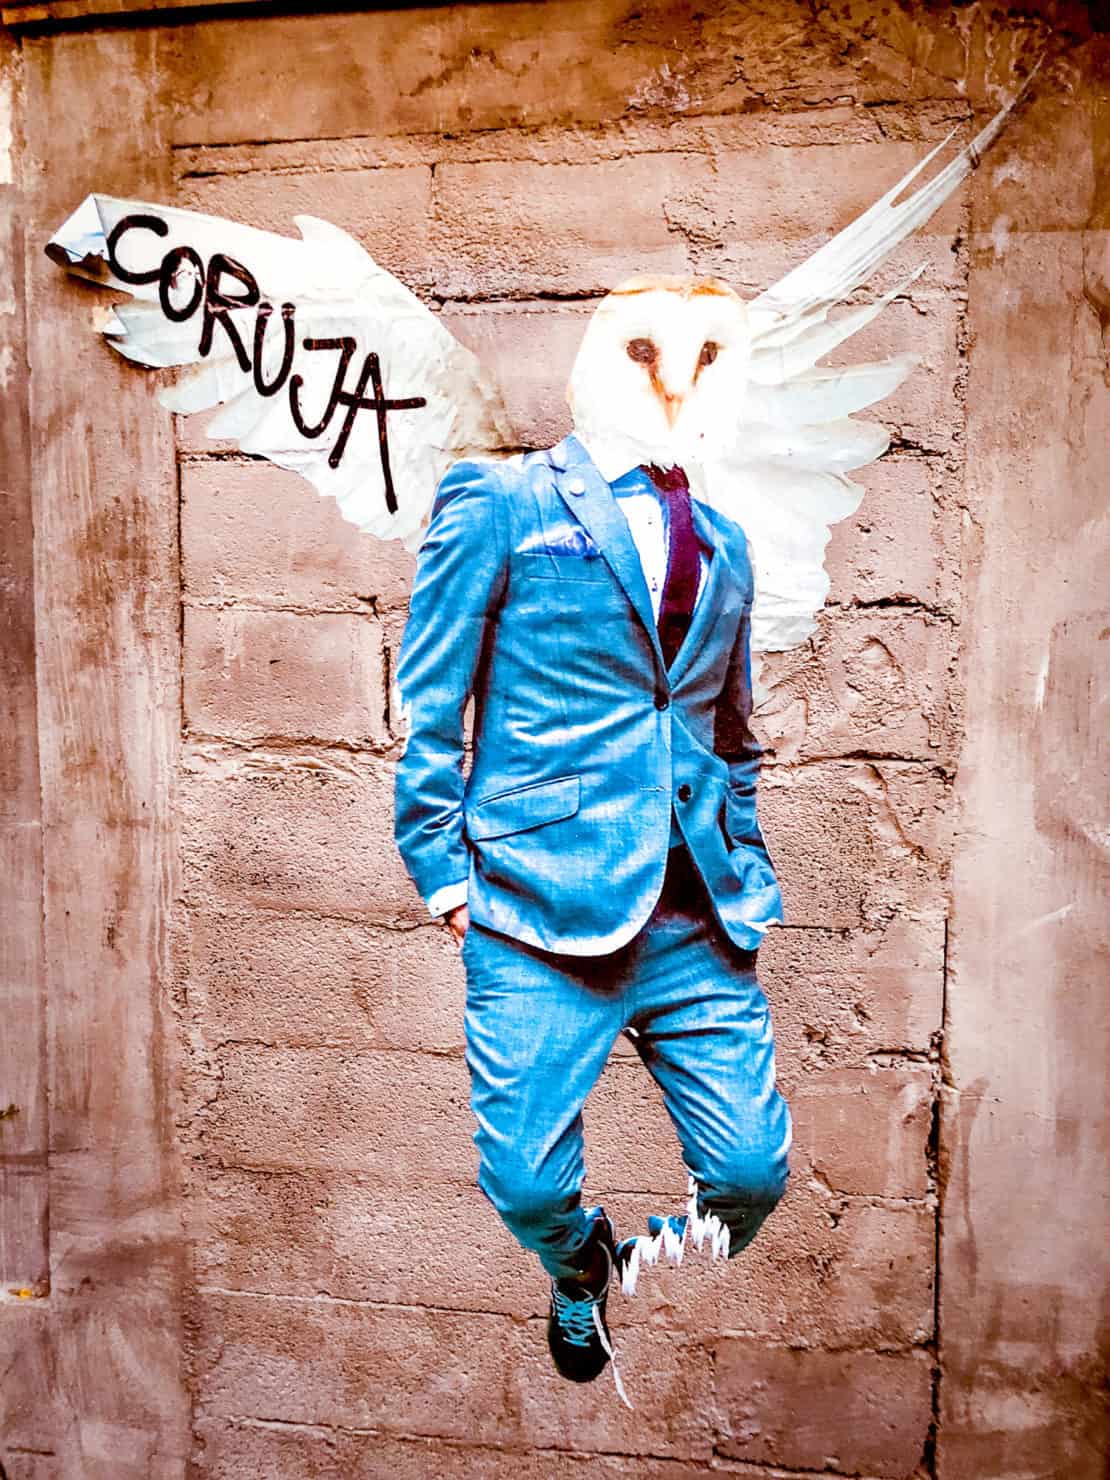 Street Art Owl Man in Suit